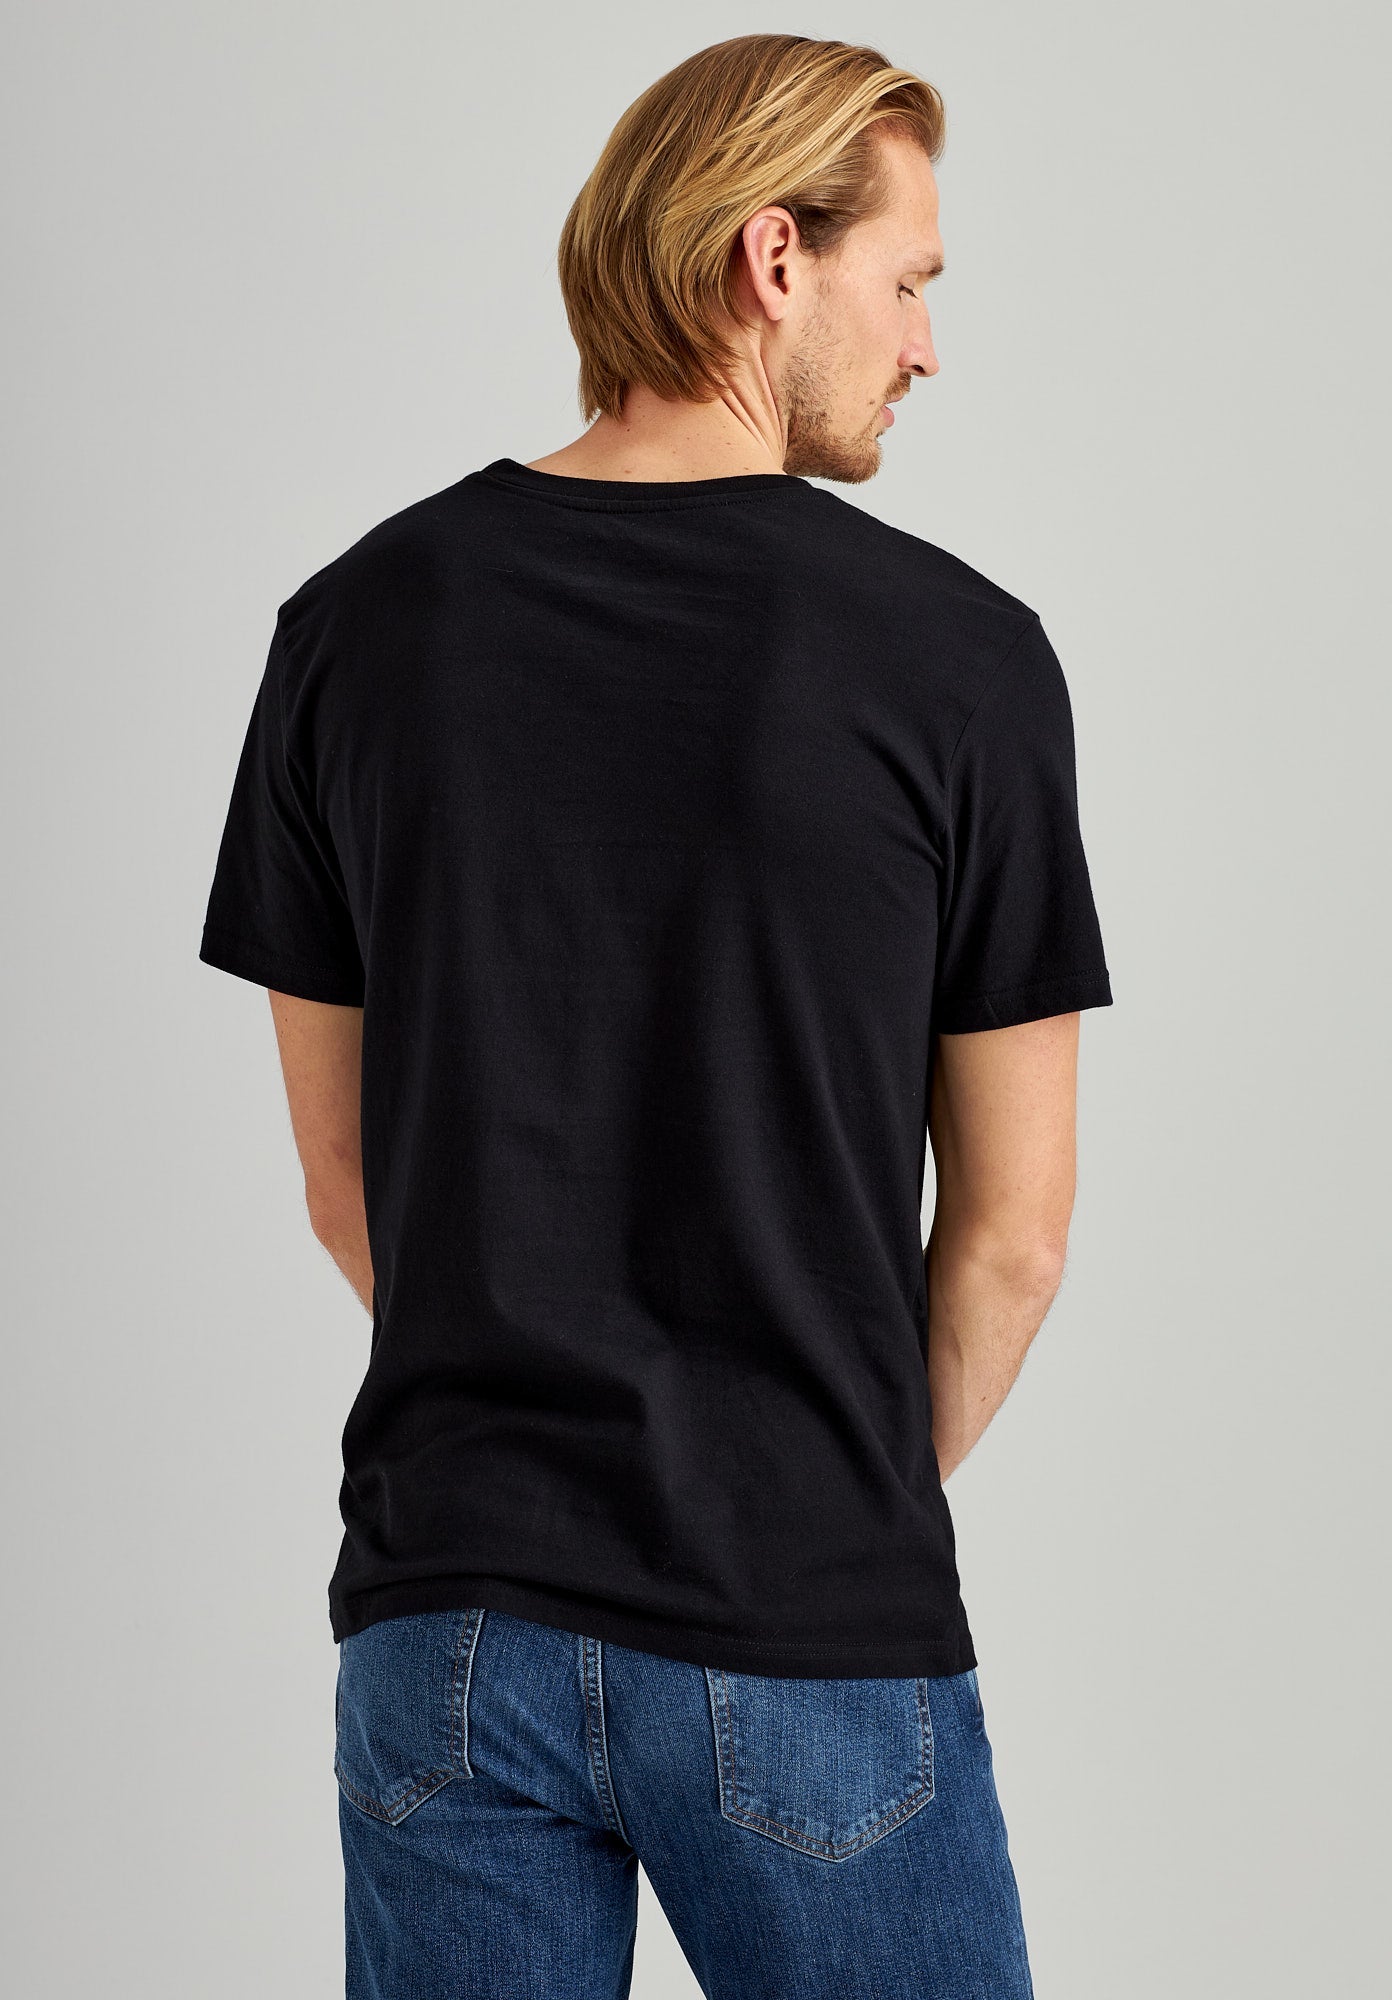 Black T-shirt 3-pack TT02 made of organic cotton from Thokkthokk